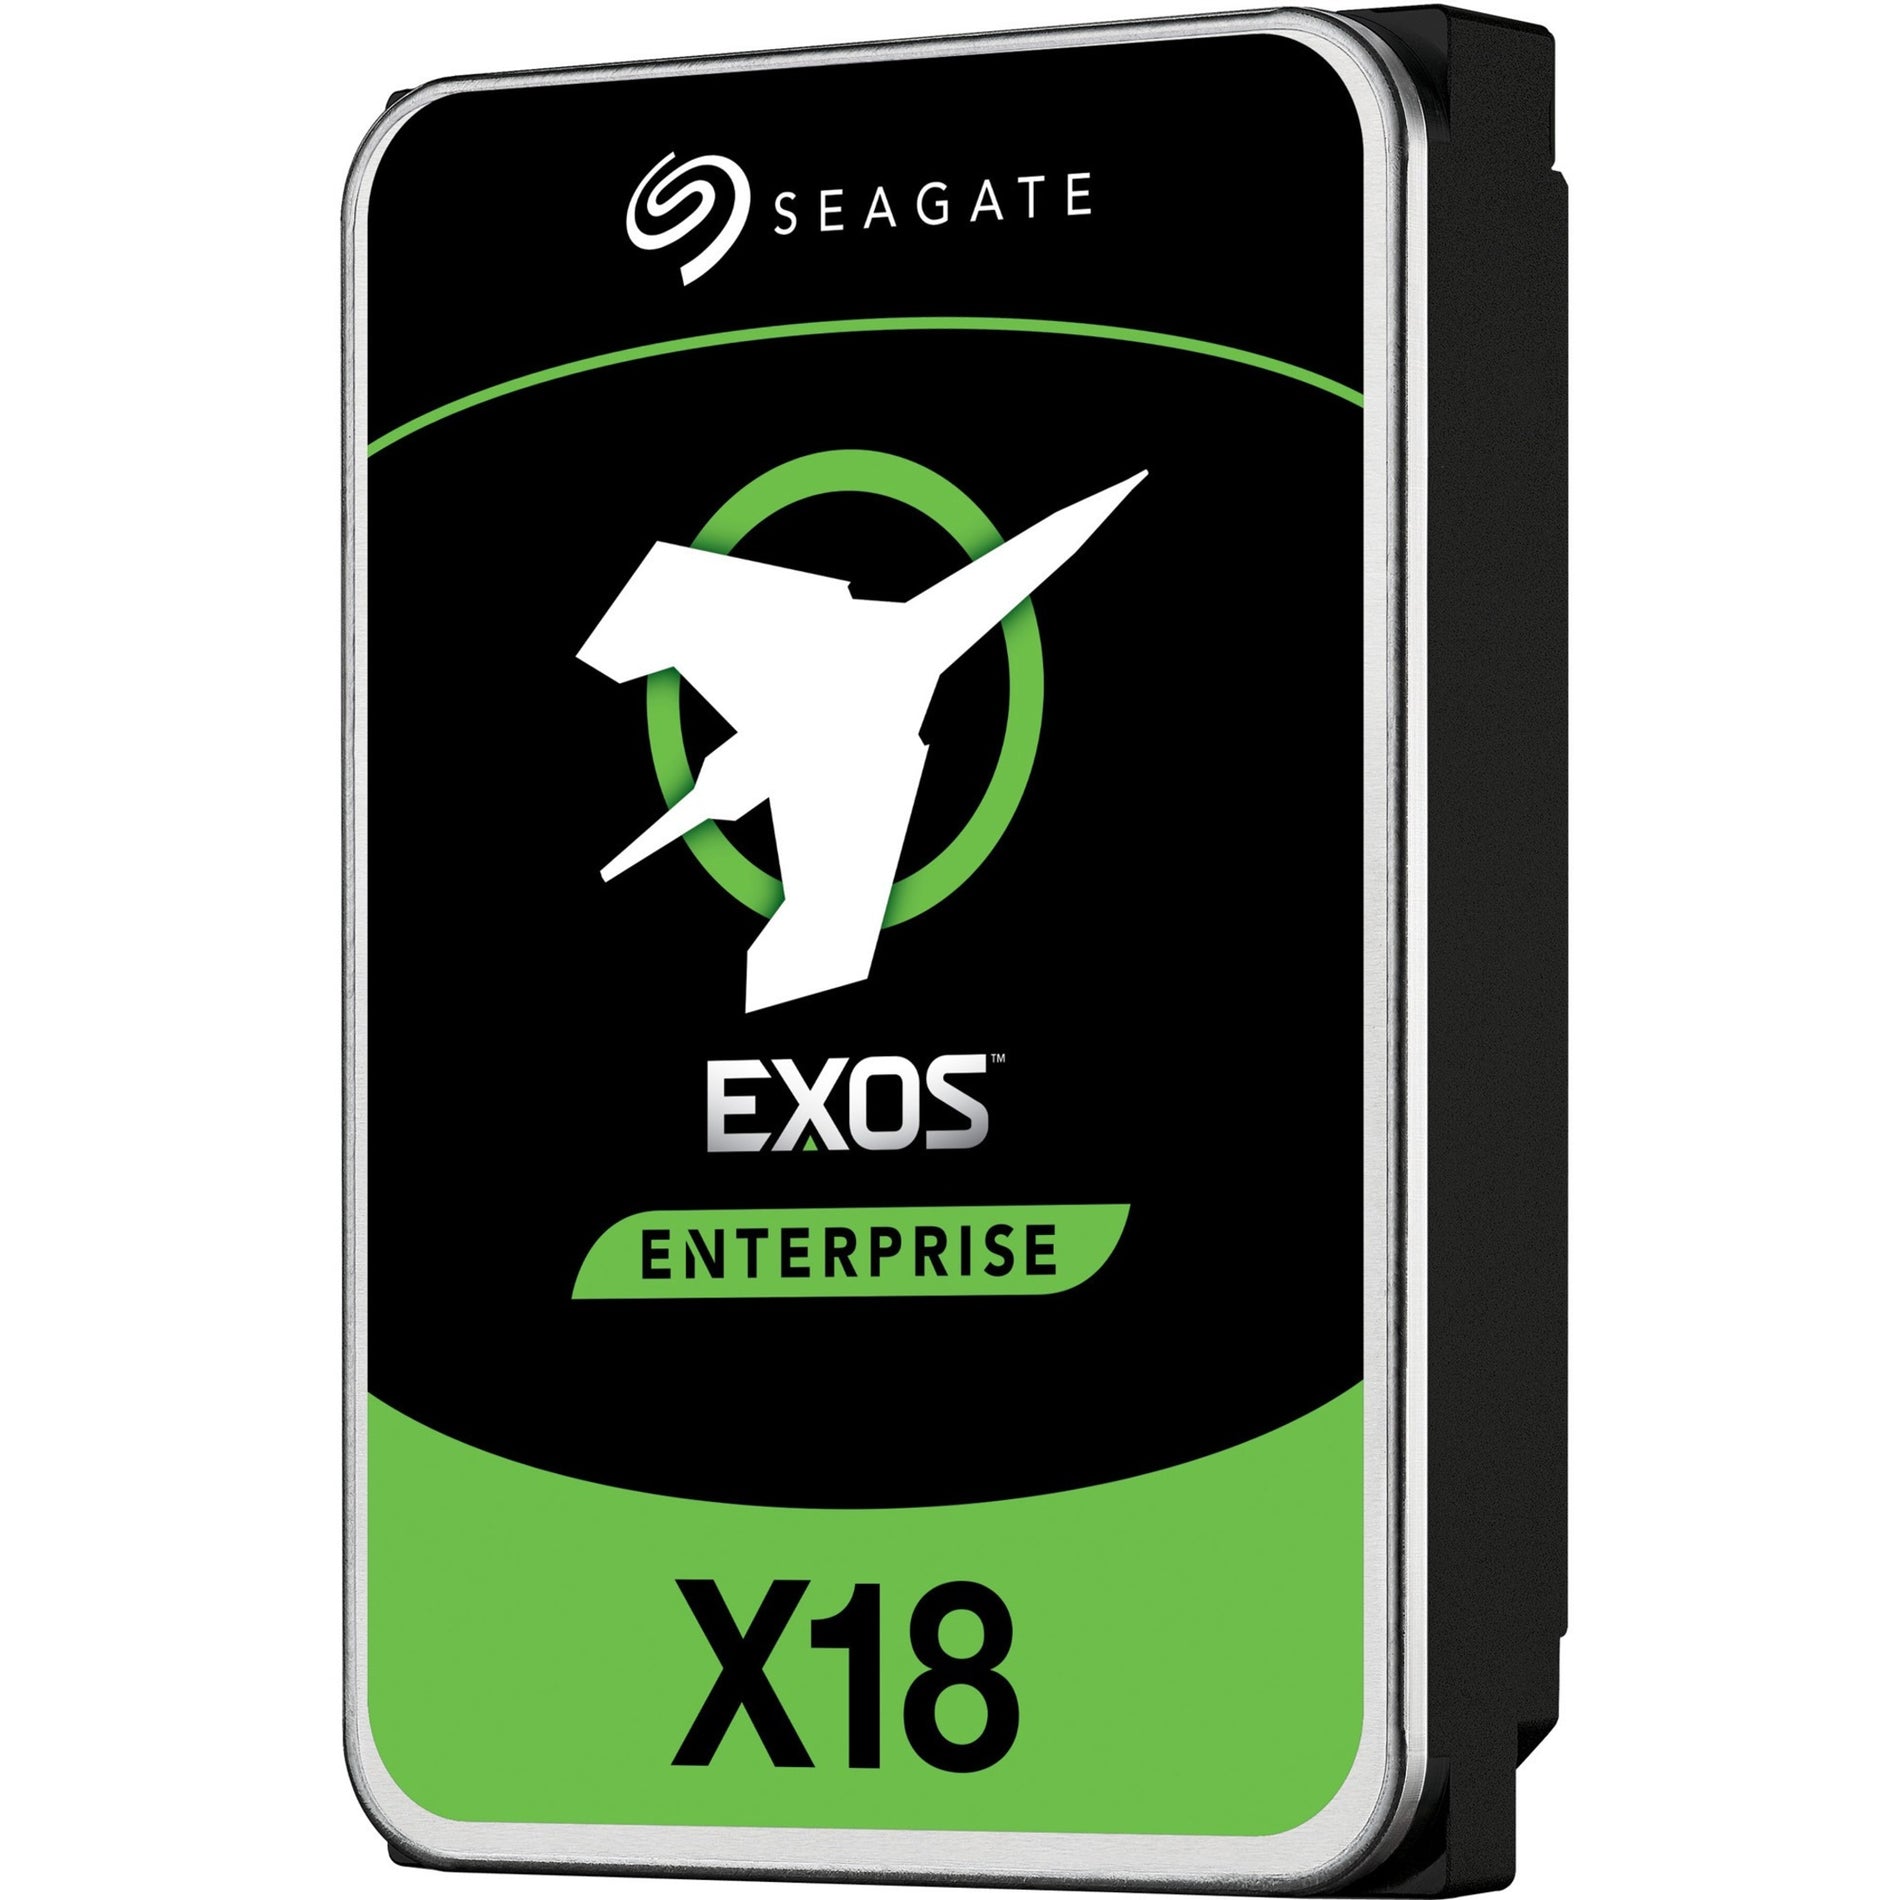 Seagate ST12000NM004J Exos X18 Hard Drive, 12TB Storage Capacity, 7200 RPM, 512e/4Kn, 5 Year Warranty